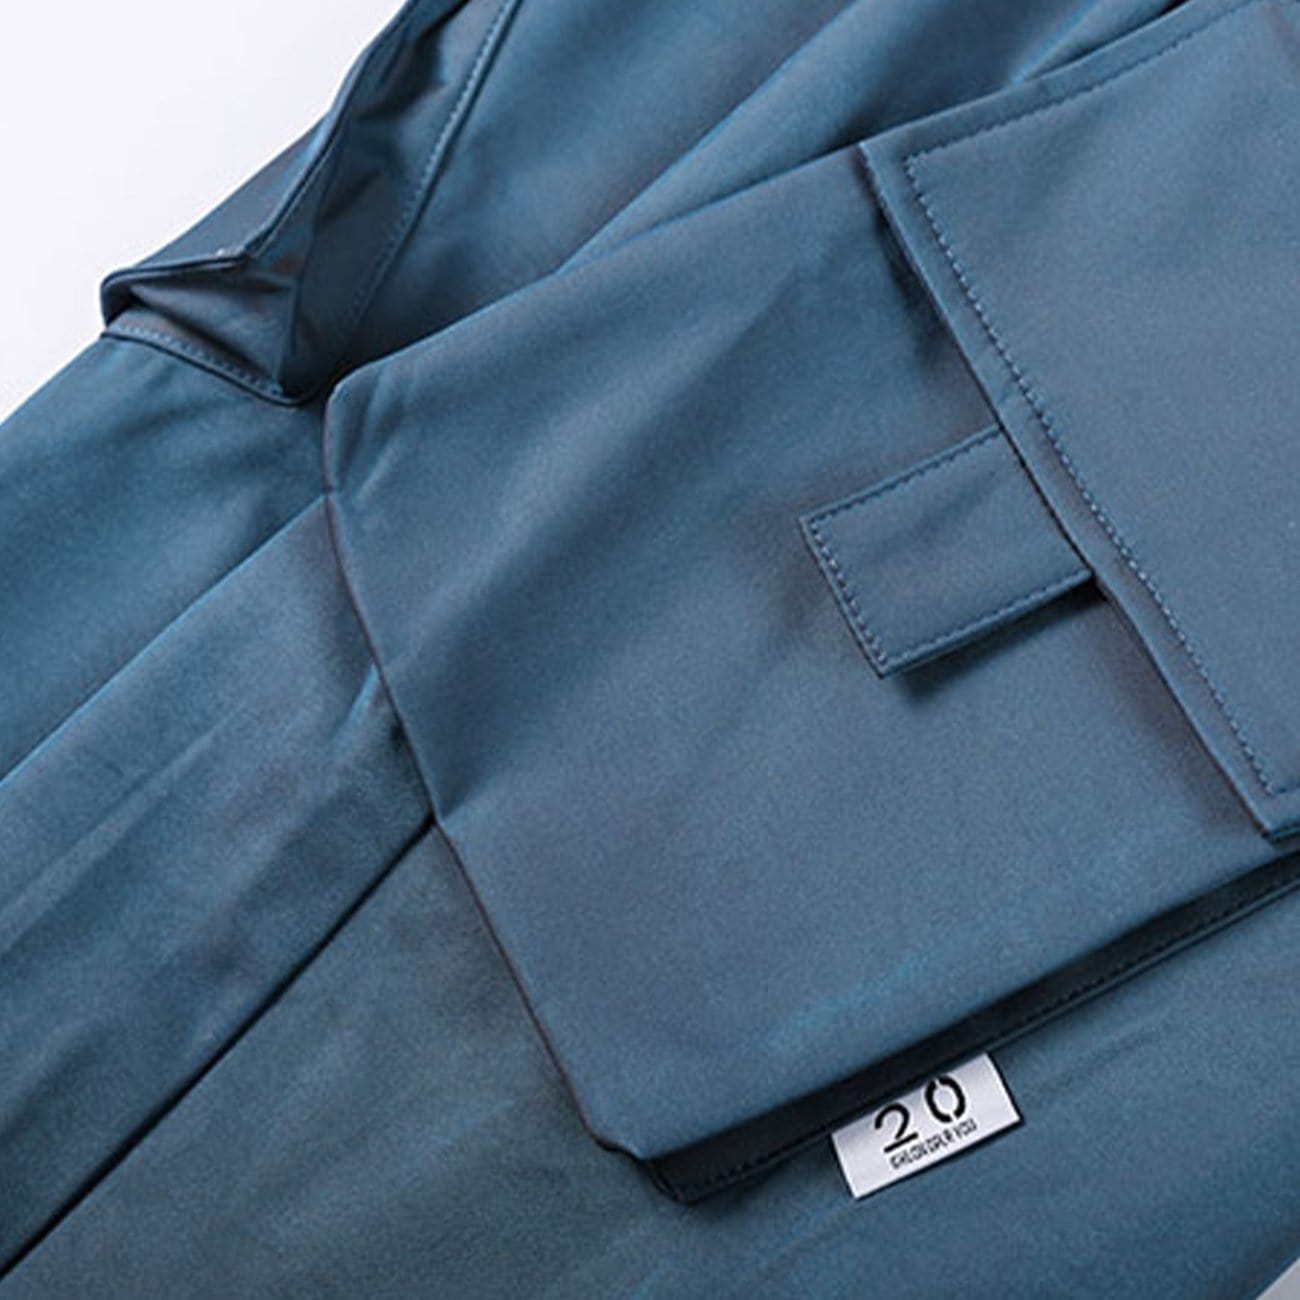 Reflective Side Pockets Ribbons Fleece Cargo Pants Streetwear Brand Techwear Combat Tactical YUGEN THEORY